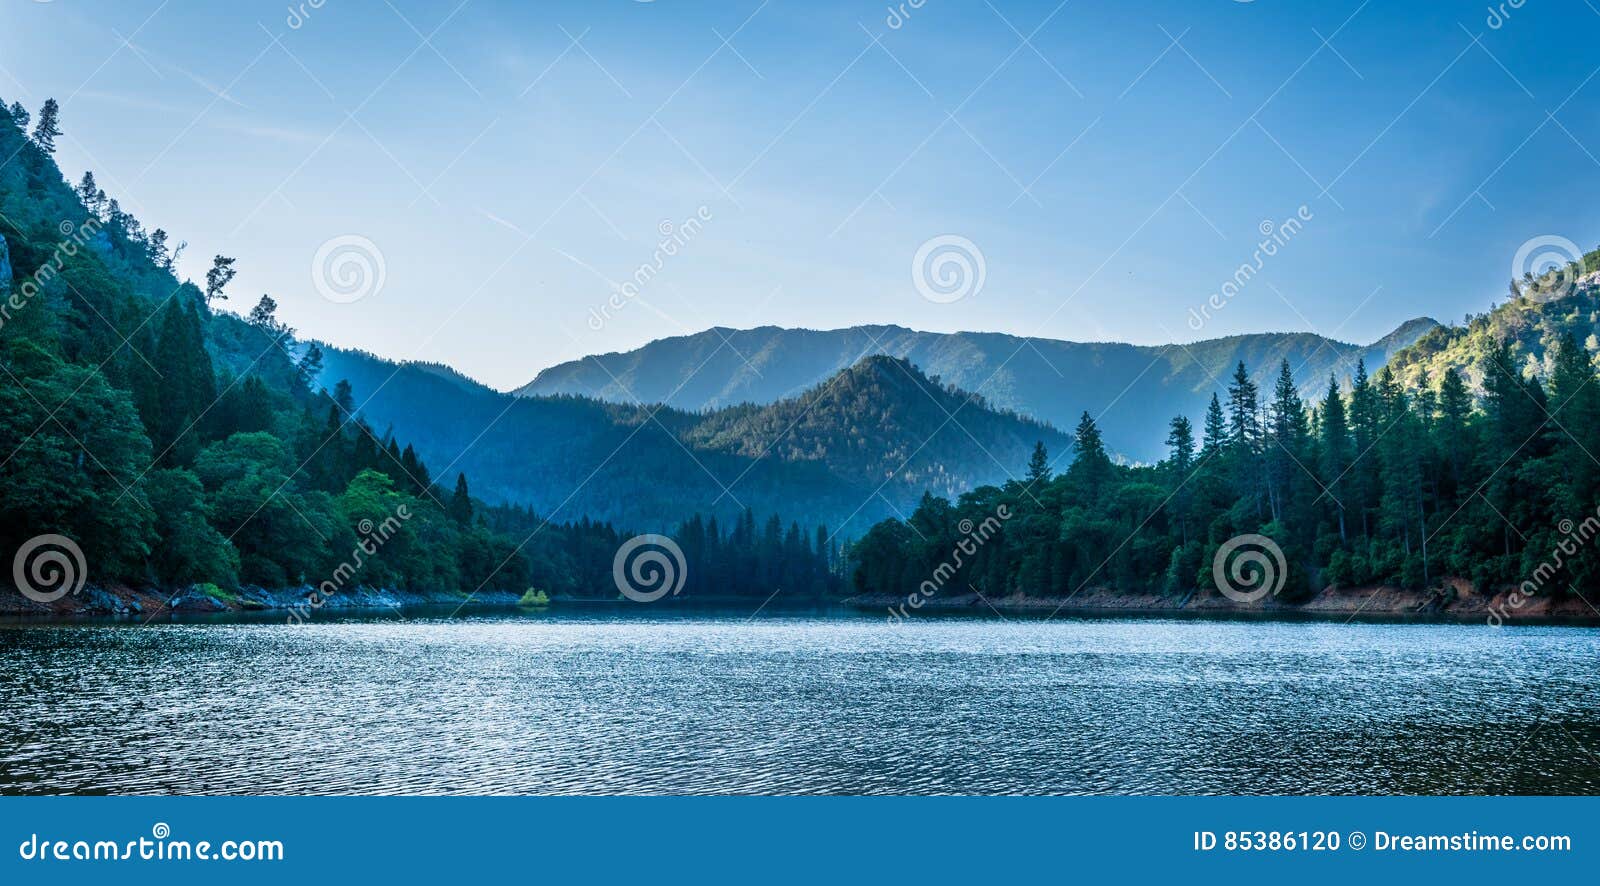 shasta lake after sunset